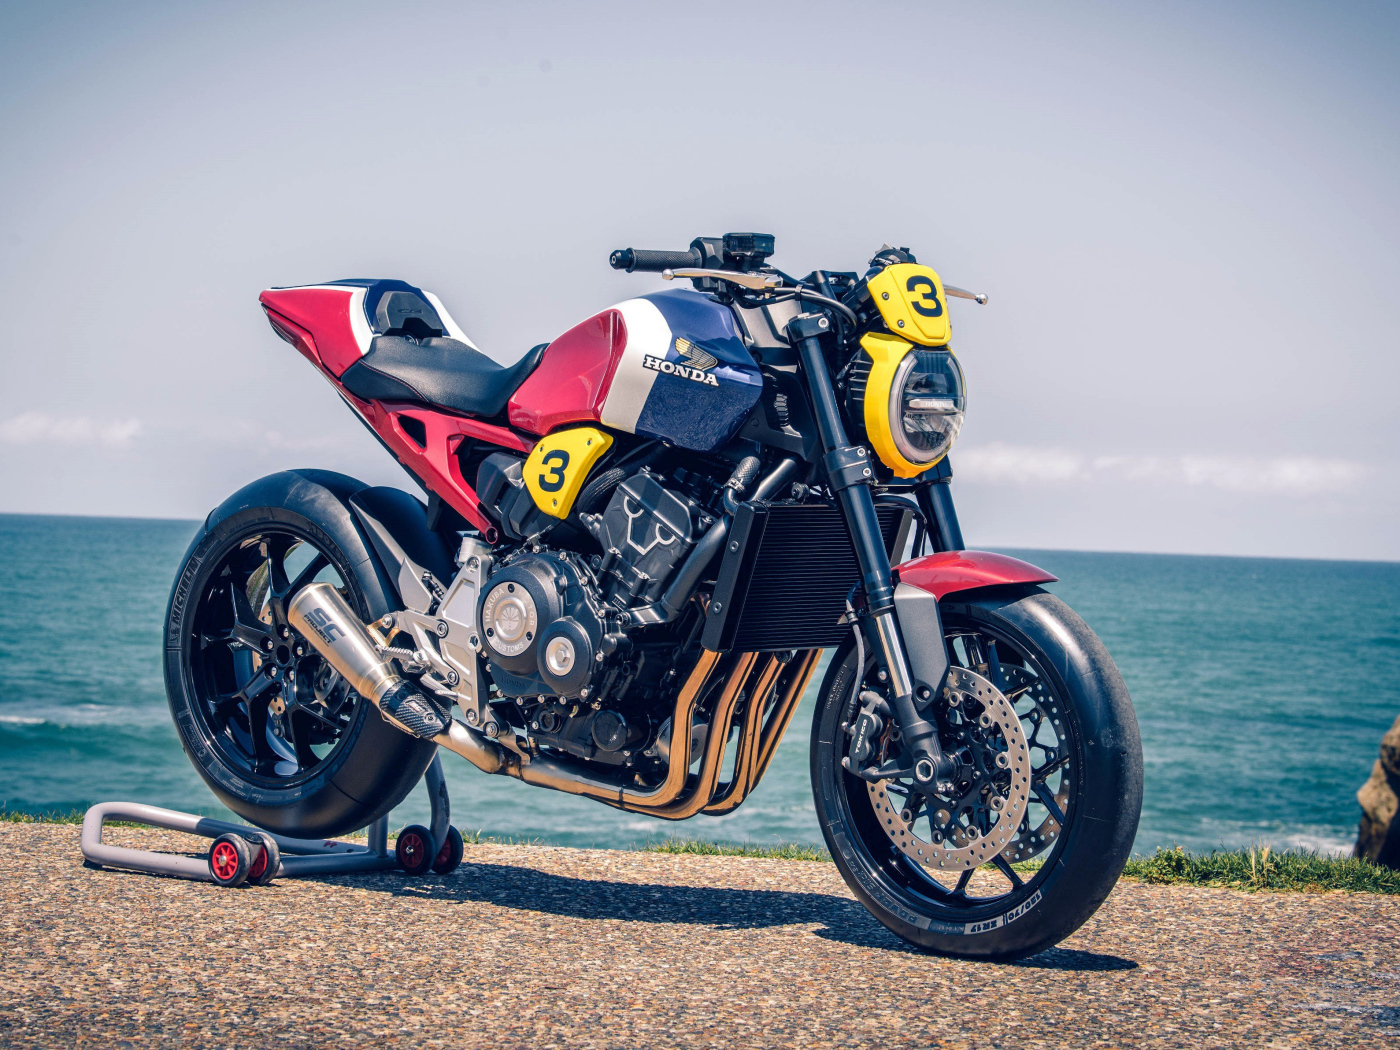 Мотоцикл  Honda CB1000R 2019 года у моря